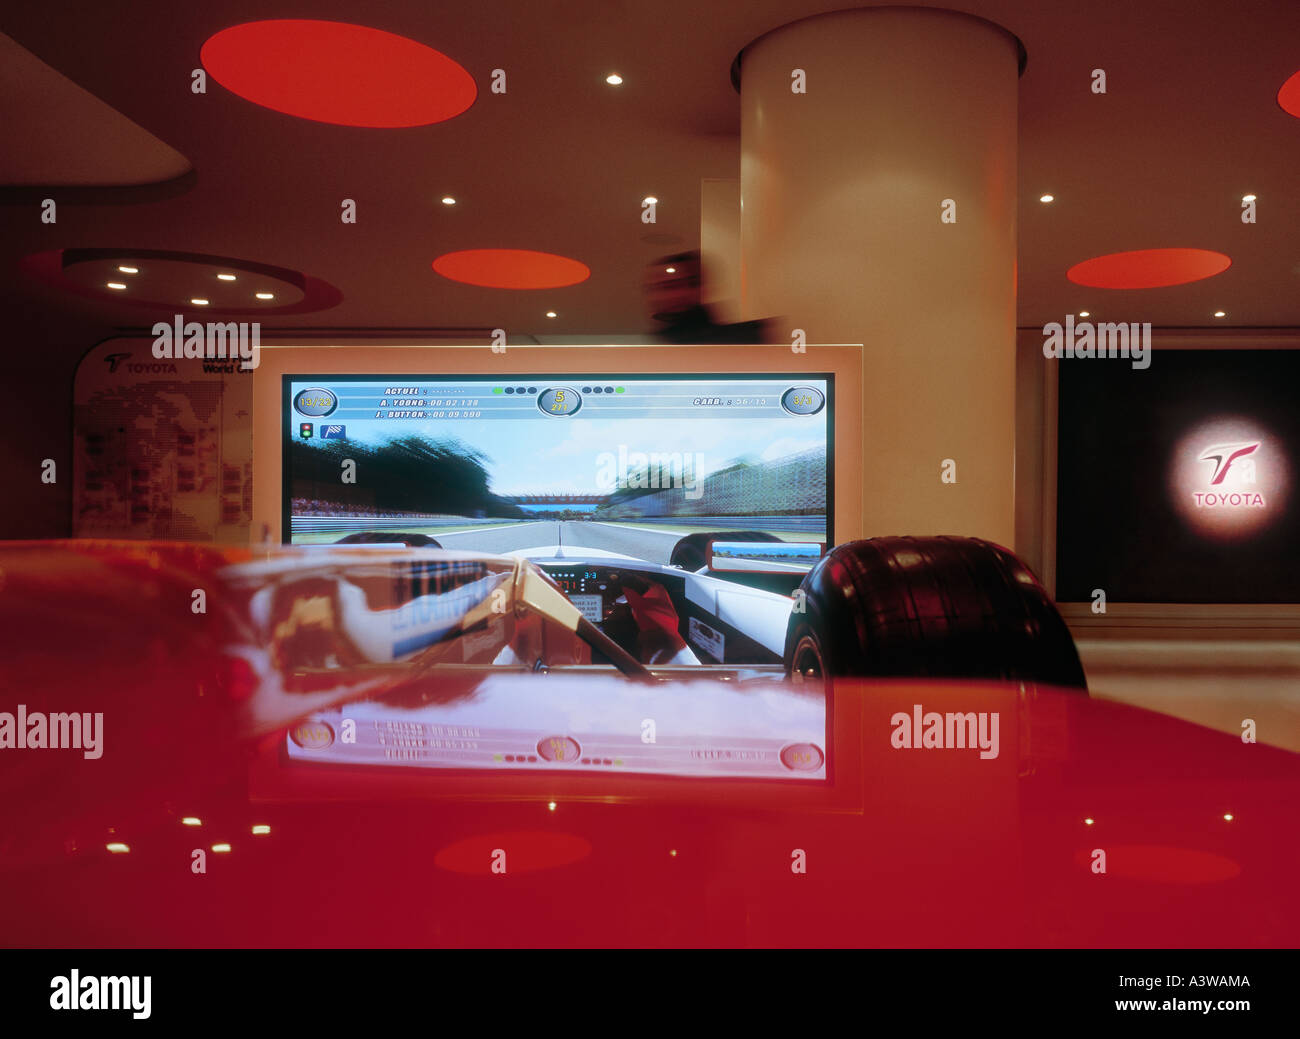 Formel 1 Simulator, Toyota Showroom, Champs-Elysées, Paris. Stockfoto